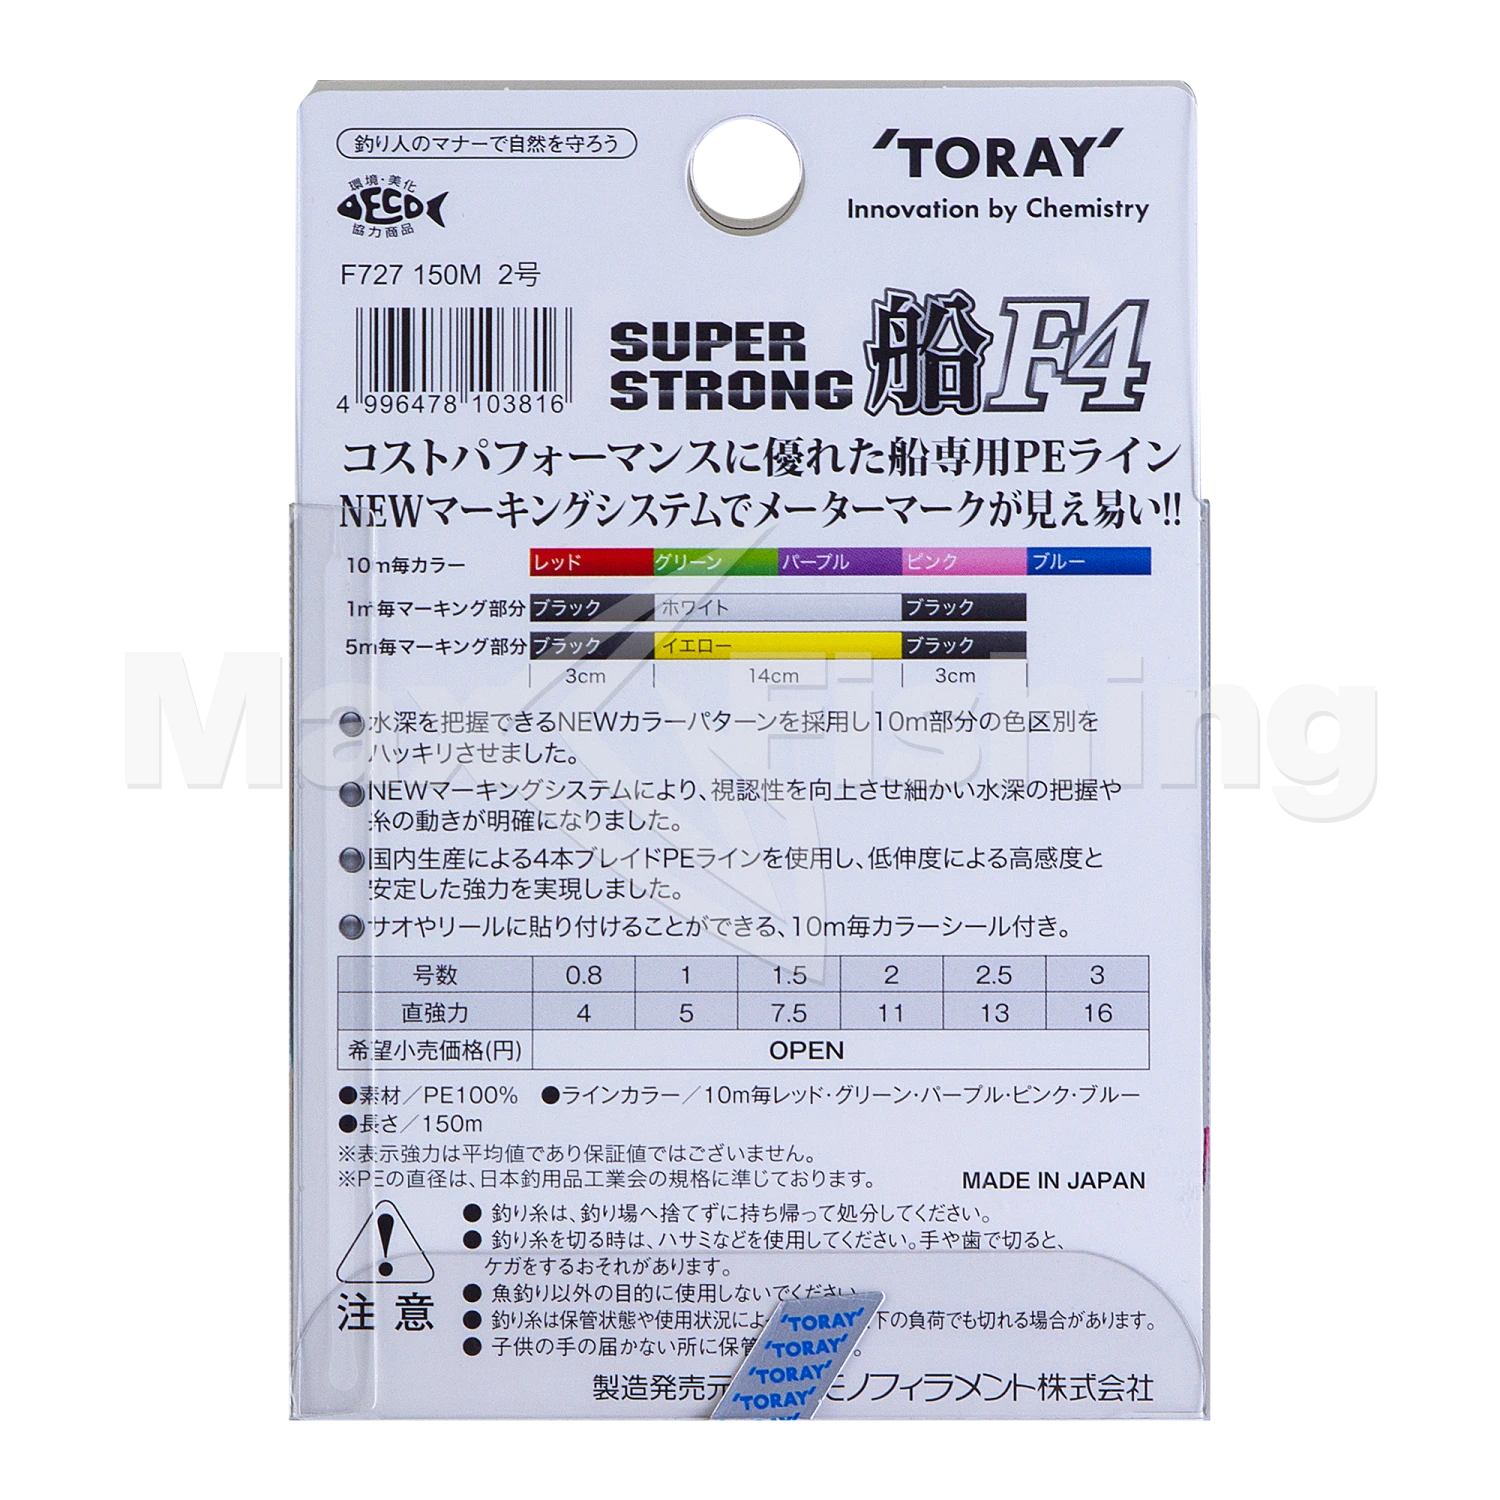 Шнур плетеный Toray Super Strong PE Fune F4 #2 150м (multicolor)